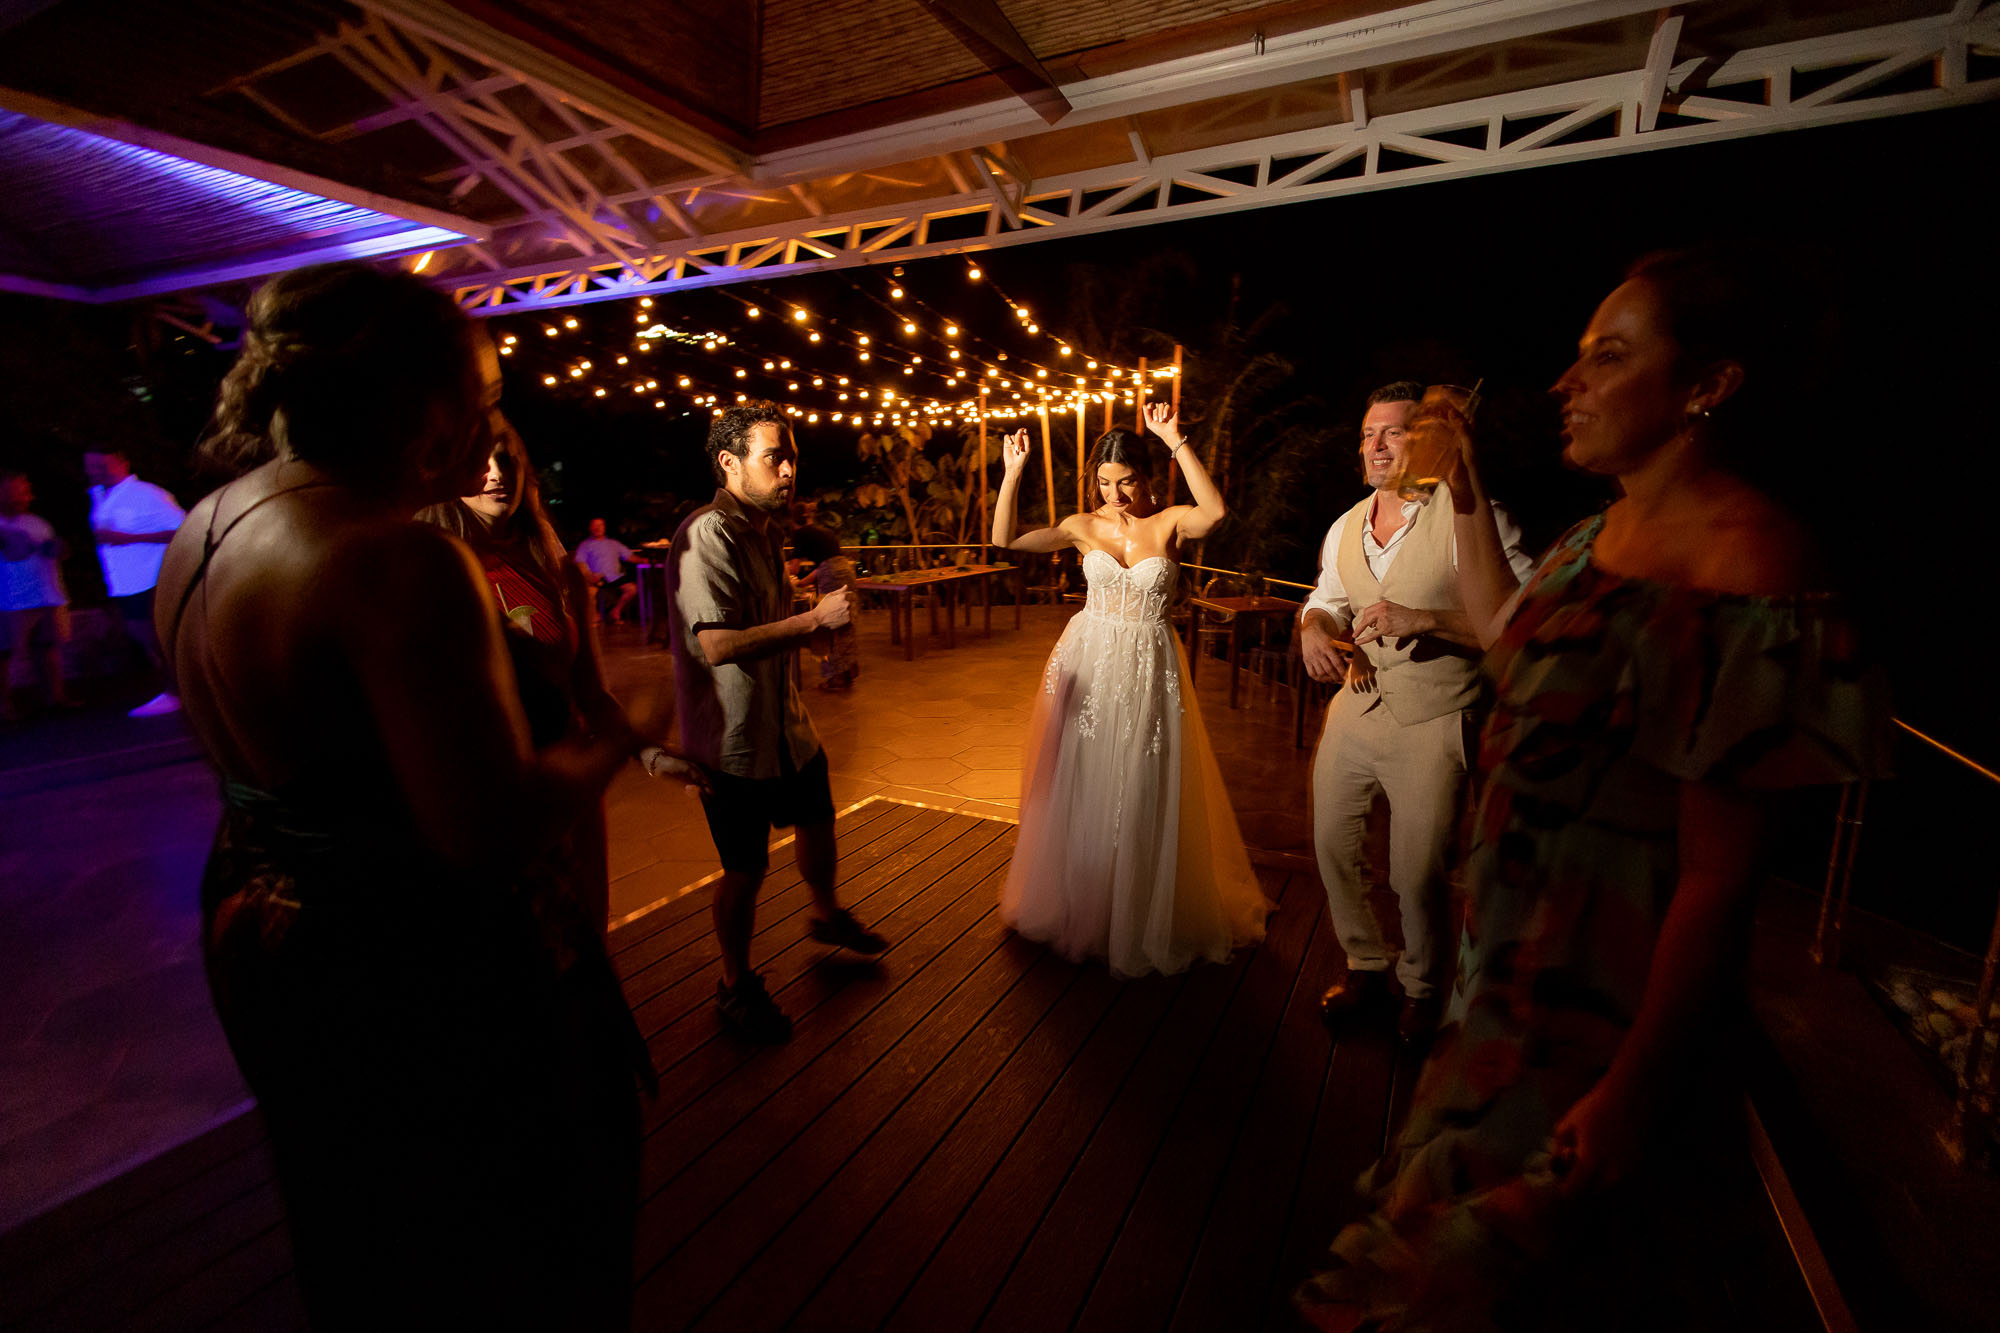 plan a wedding in Costa Rica and enjoy a tropical evening of fun!